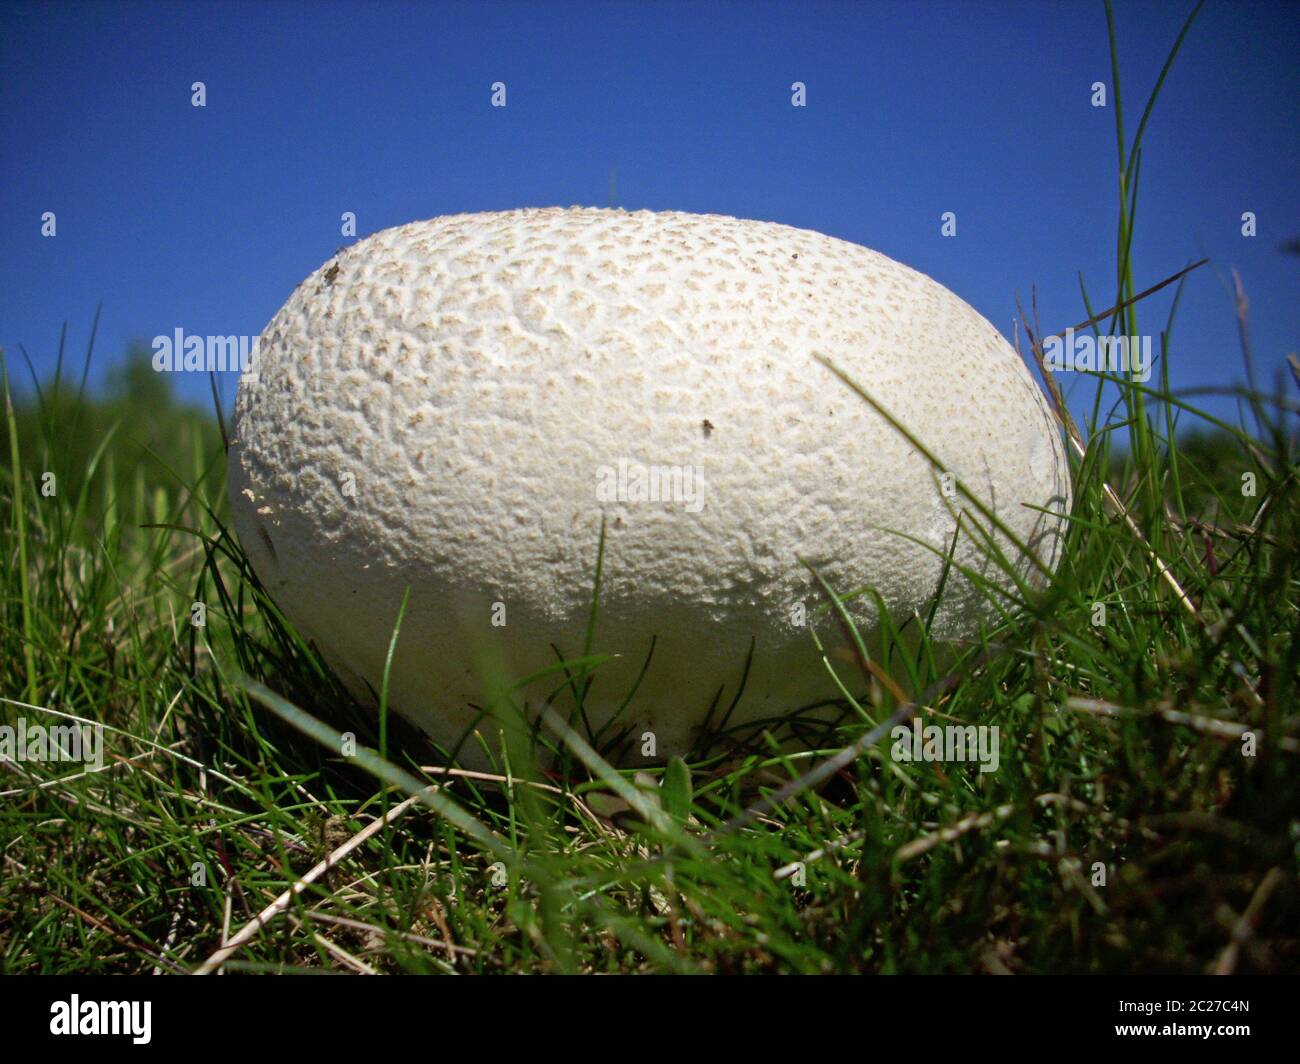 Giant puffball (Calvatia gigantea) fungus growing in grassland. Background of grass and deep blue sky. Stock Photo